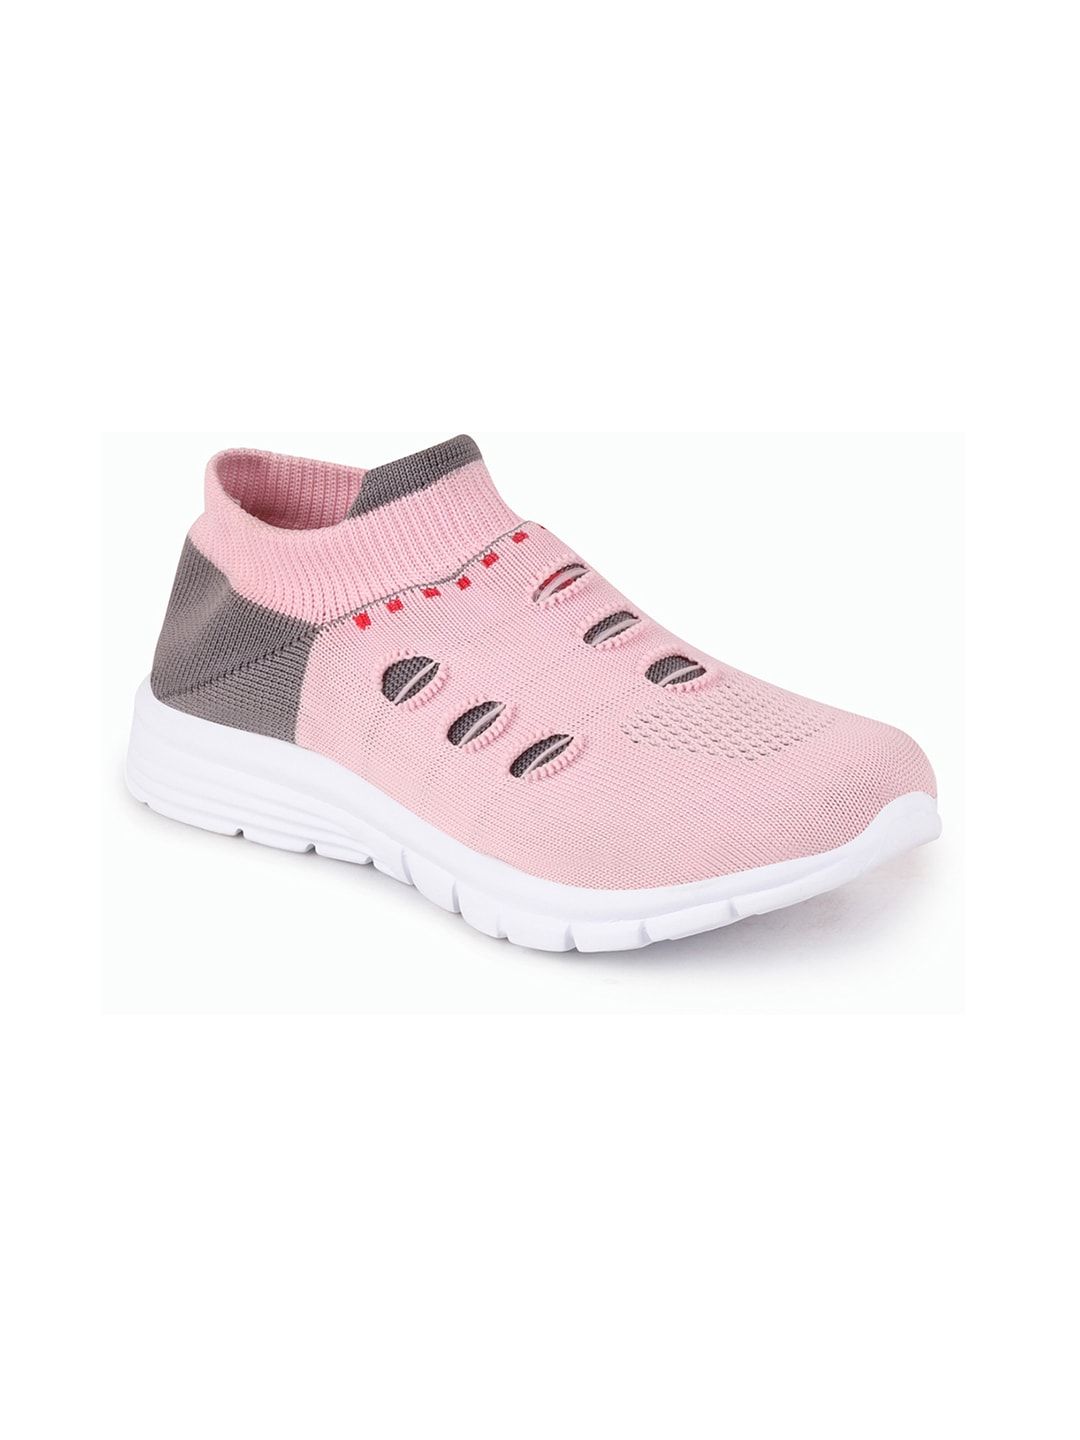 FAUSTO Women Pink & Grey Mesh Flyknit Walking Shoes Price in India